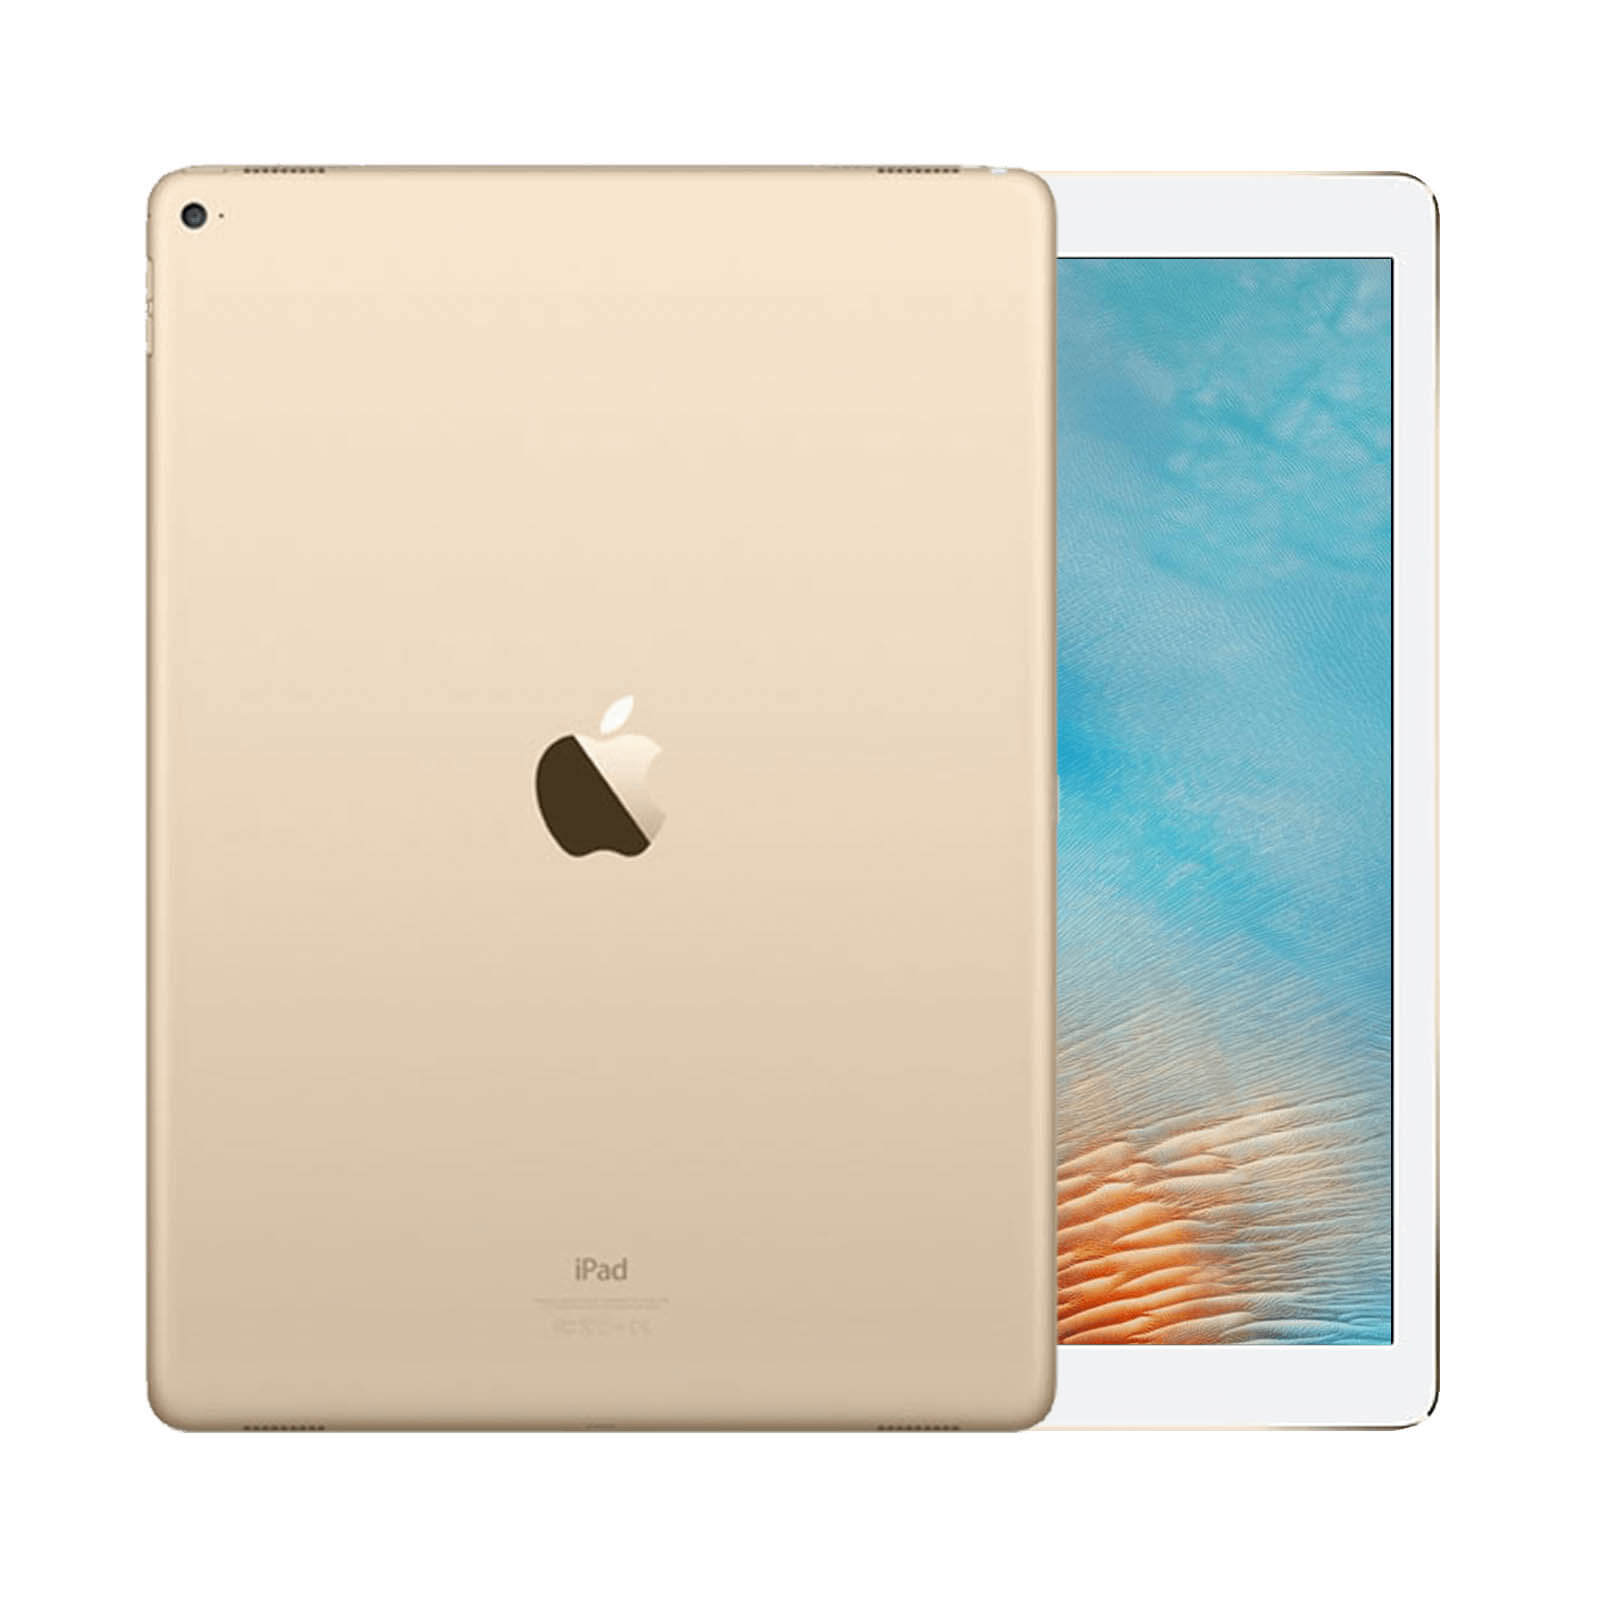 iPad Pro 12.9 Inch 2nd Gen 512GB Gold Very Good - WiFi